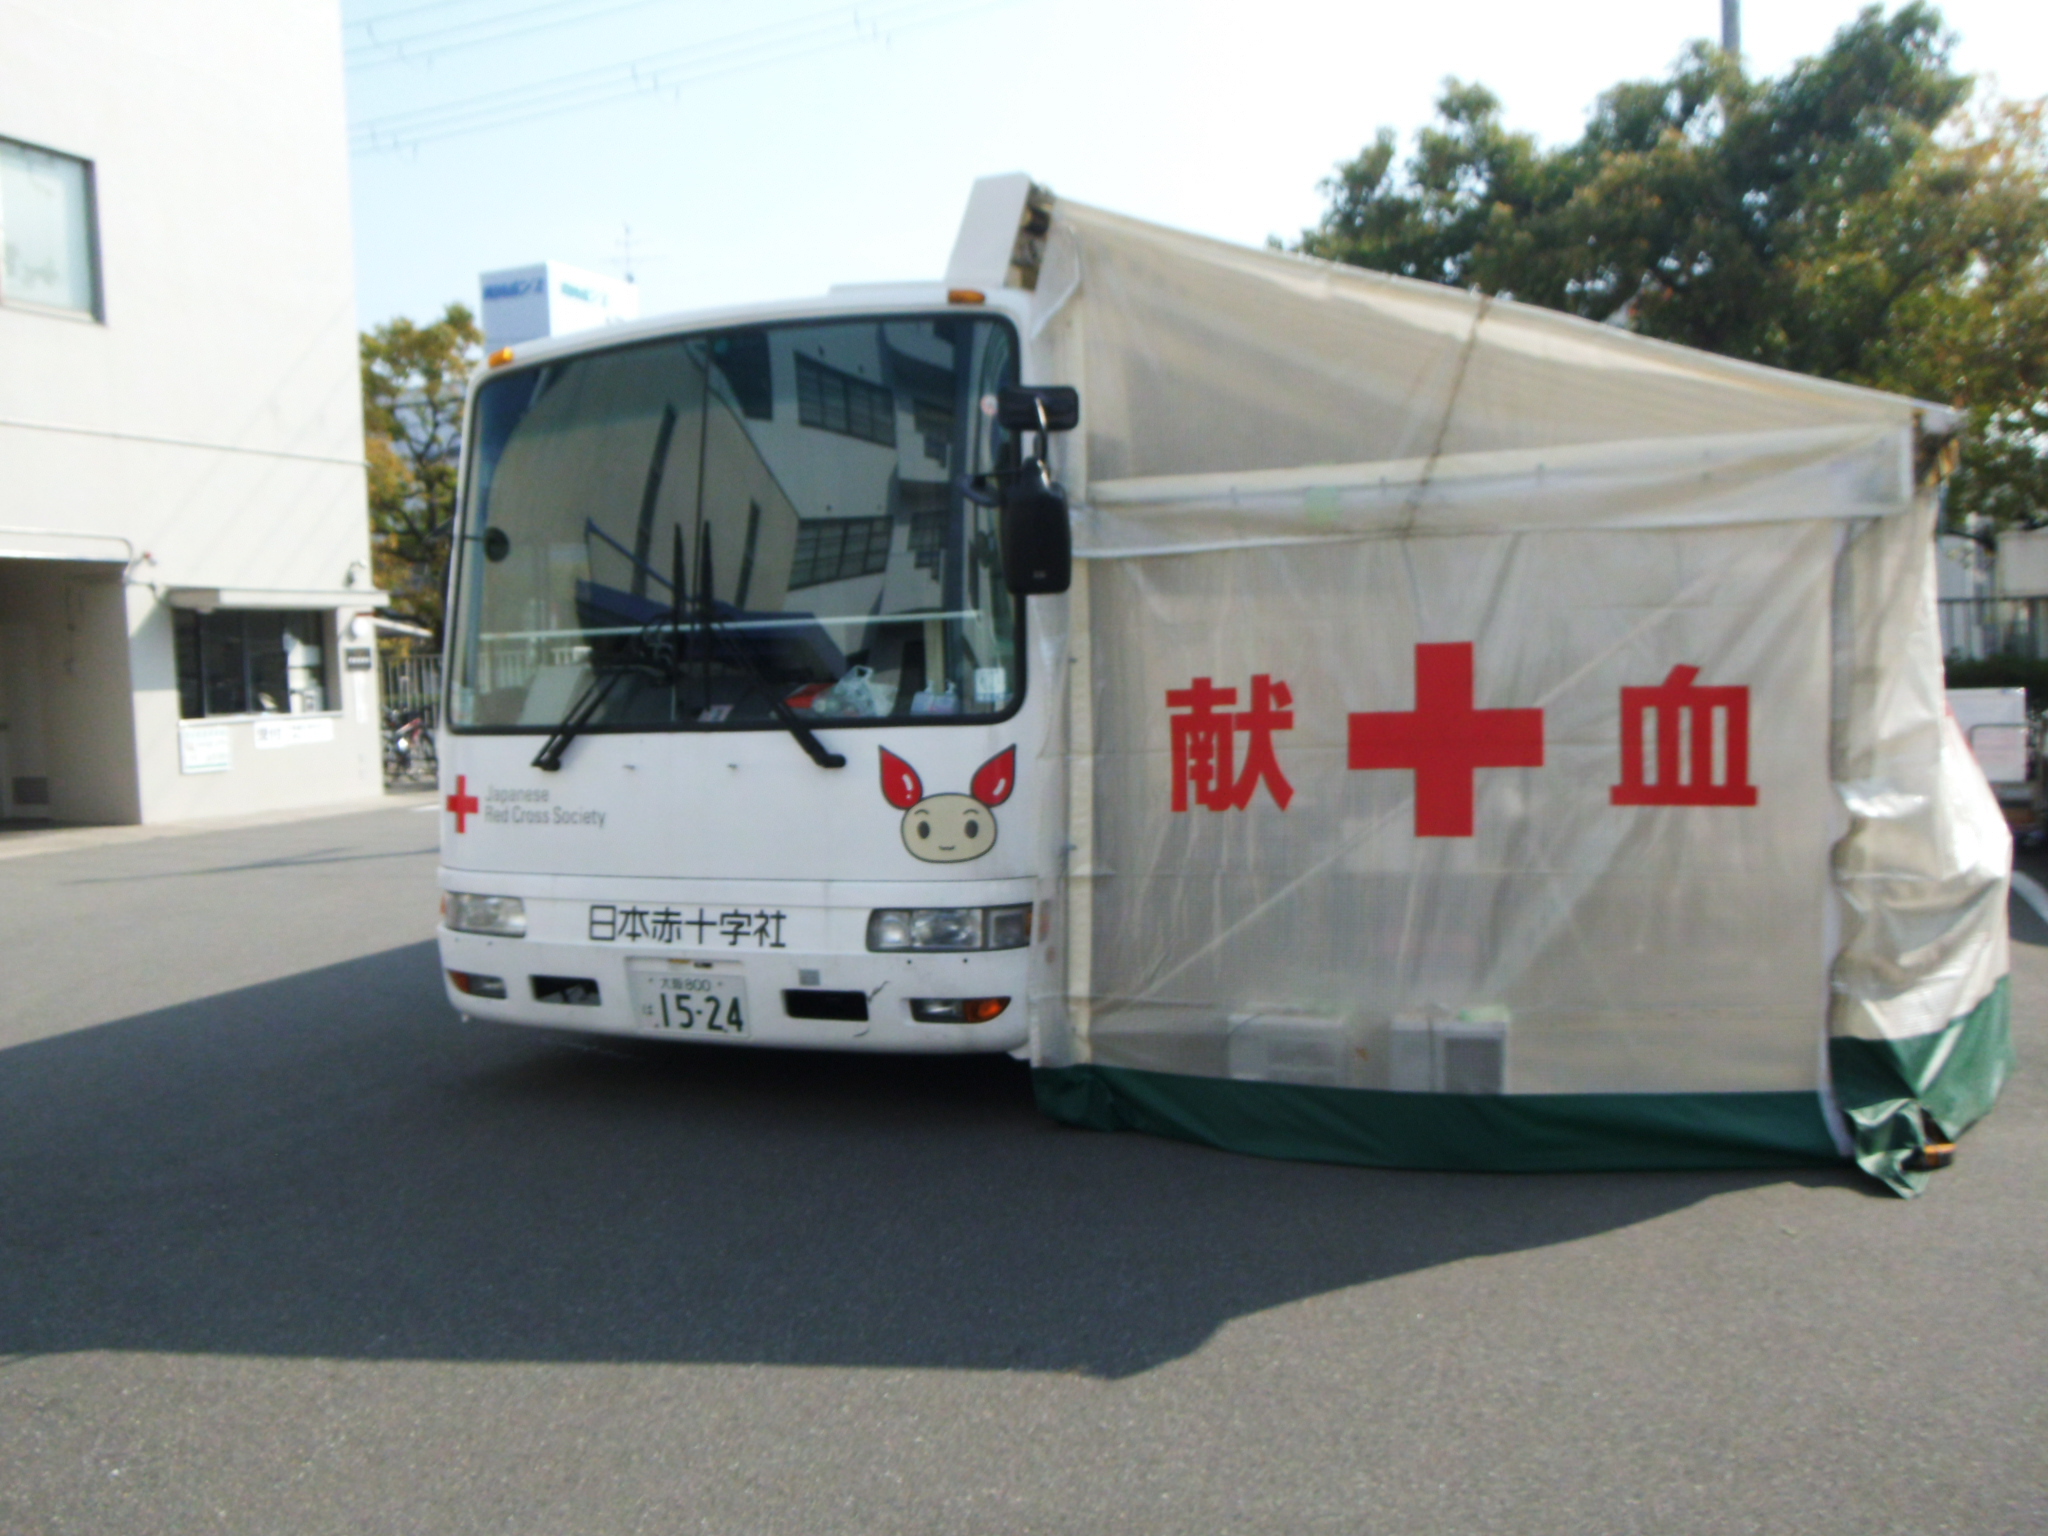 【CSR】赤十字献血車来工（社会の一員として）